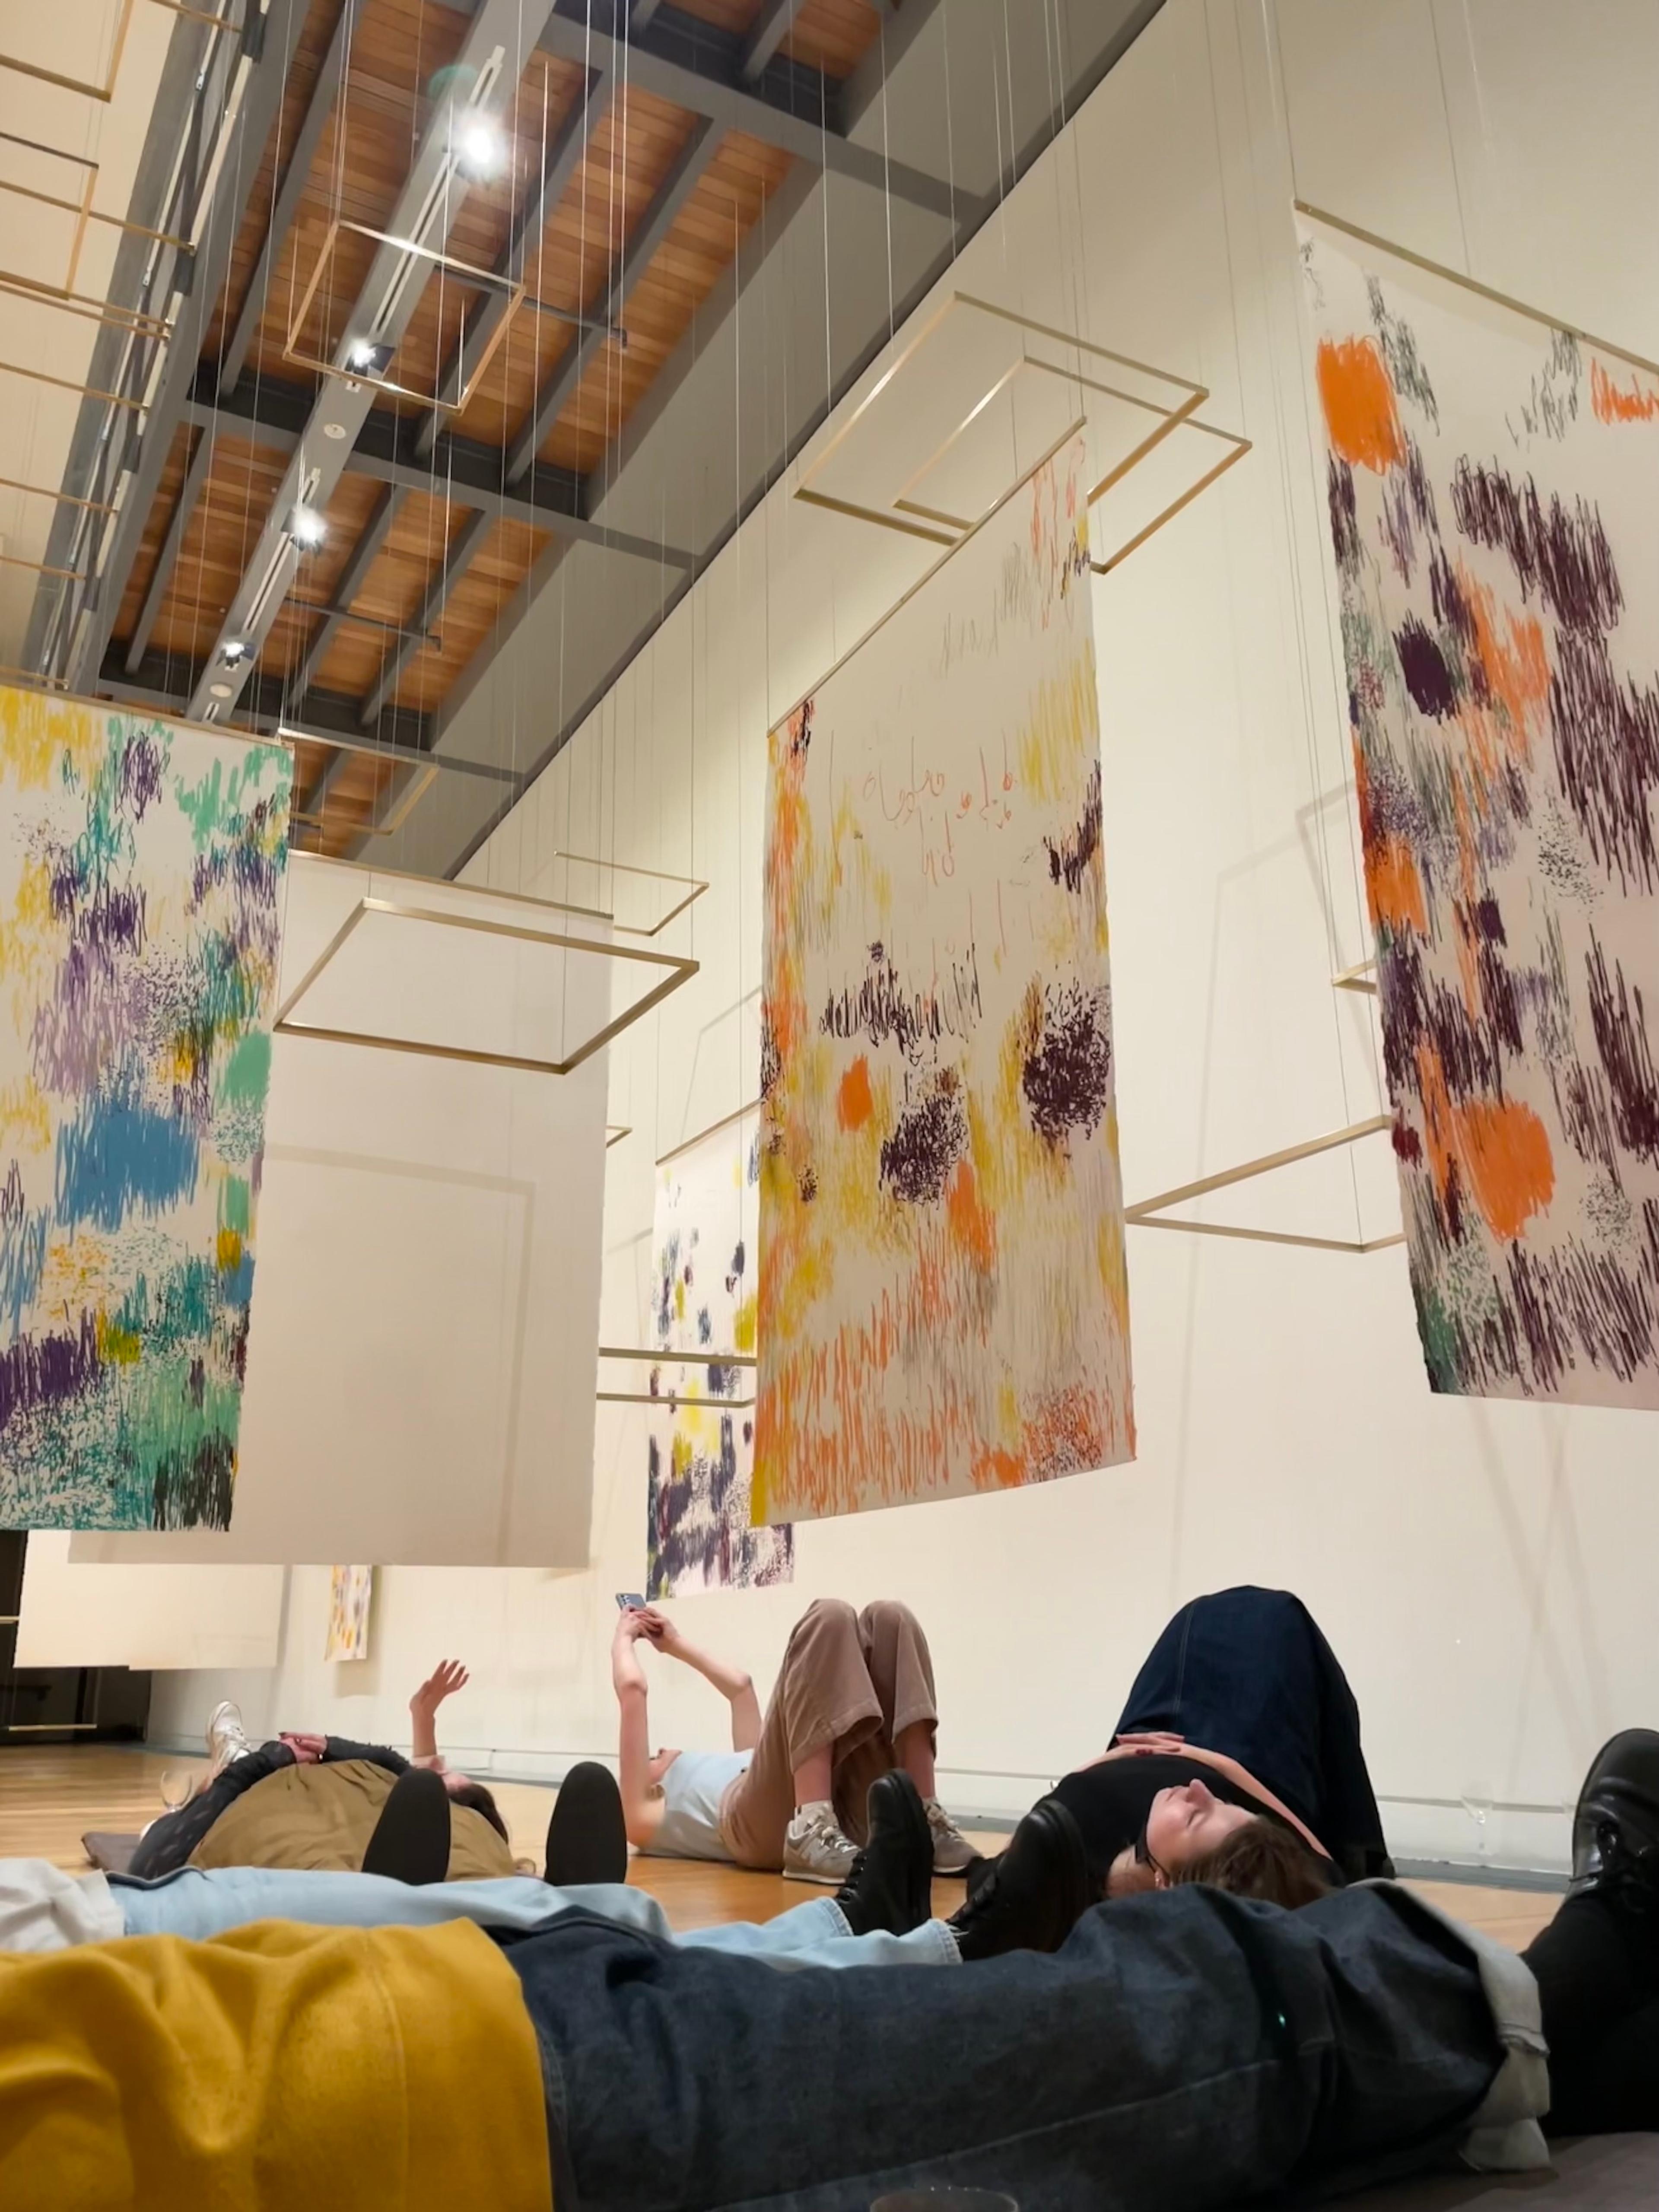 Adam Art Gallery volunteers laying on floor underneath hanging drawing and metal frames art work installation